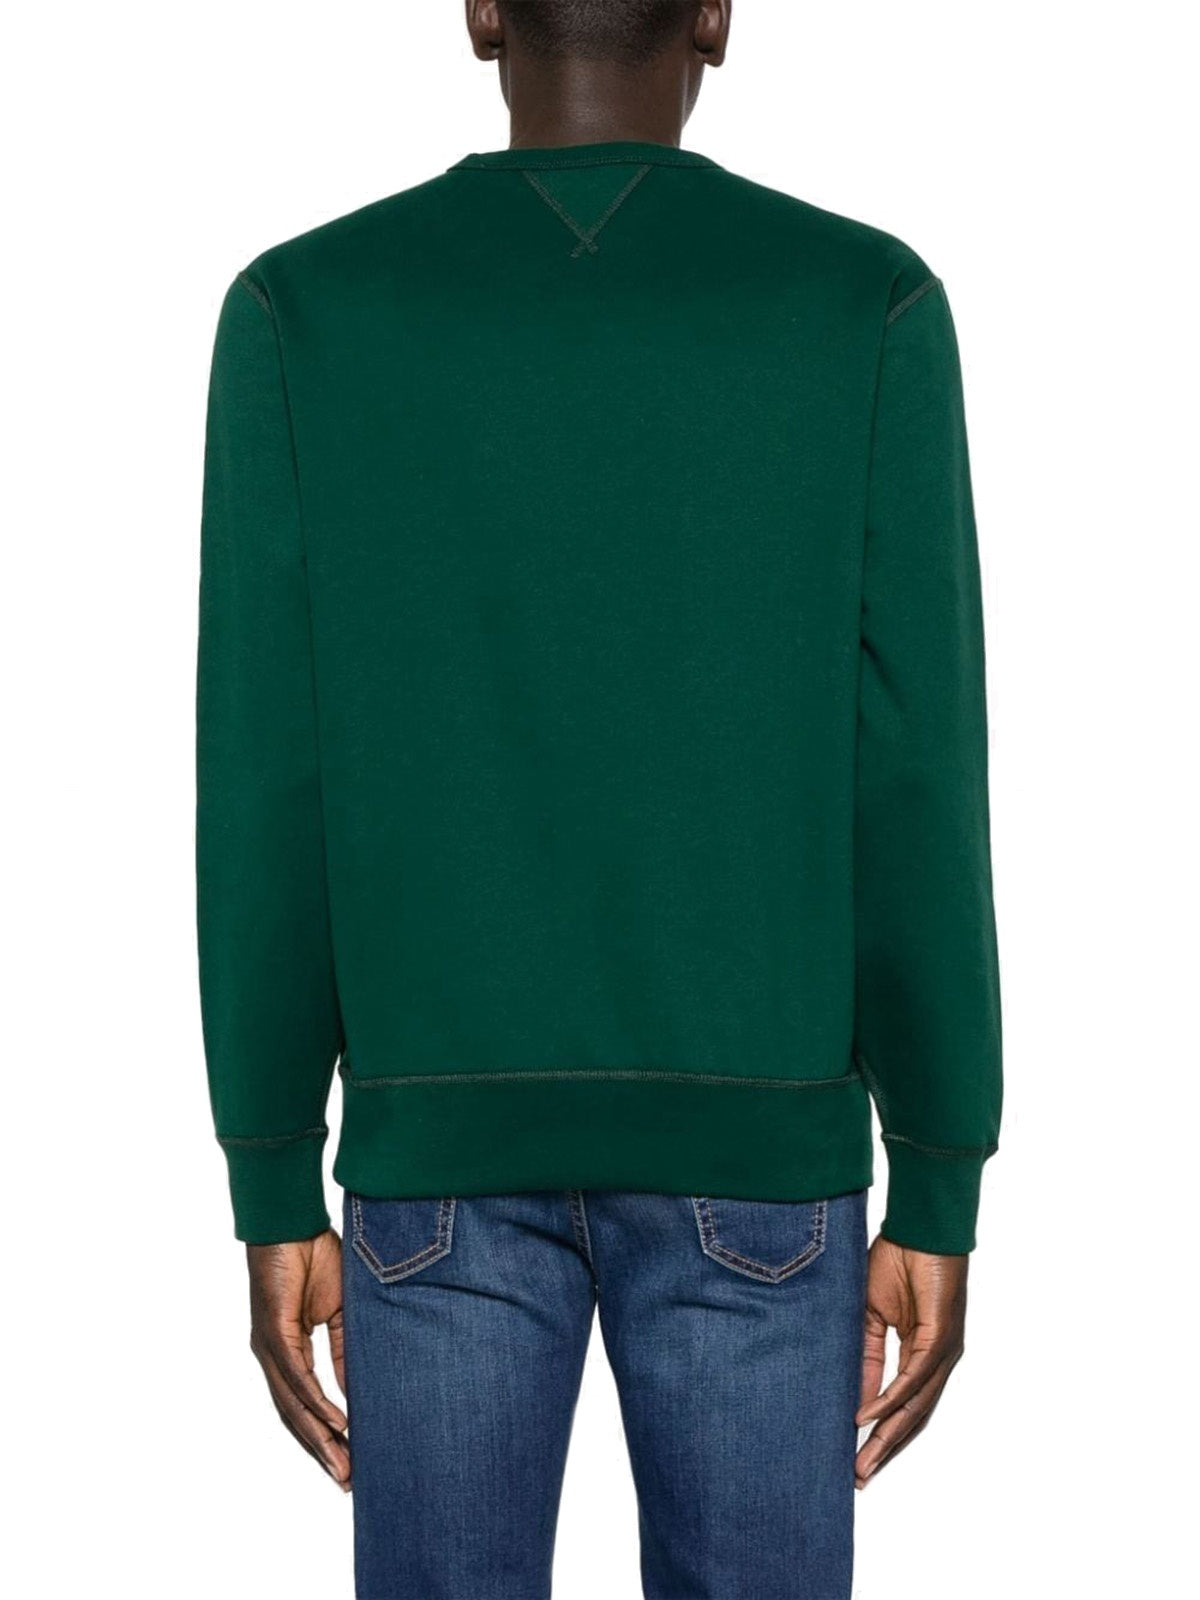 Felpe senza cappuccio Uomo Ralph Lauren - The Rl Fleece Crewneck Sweatshirt - Verde